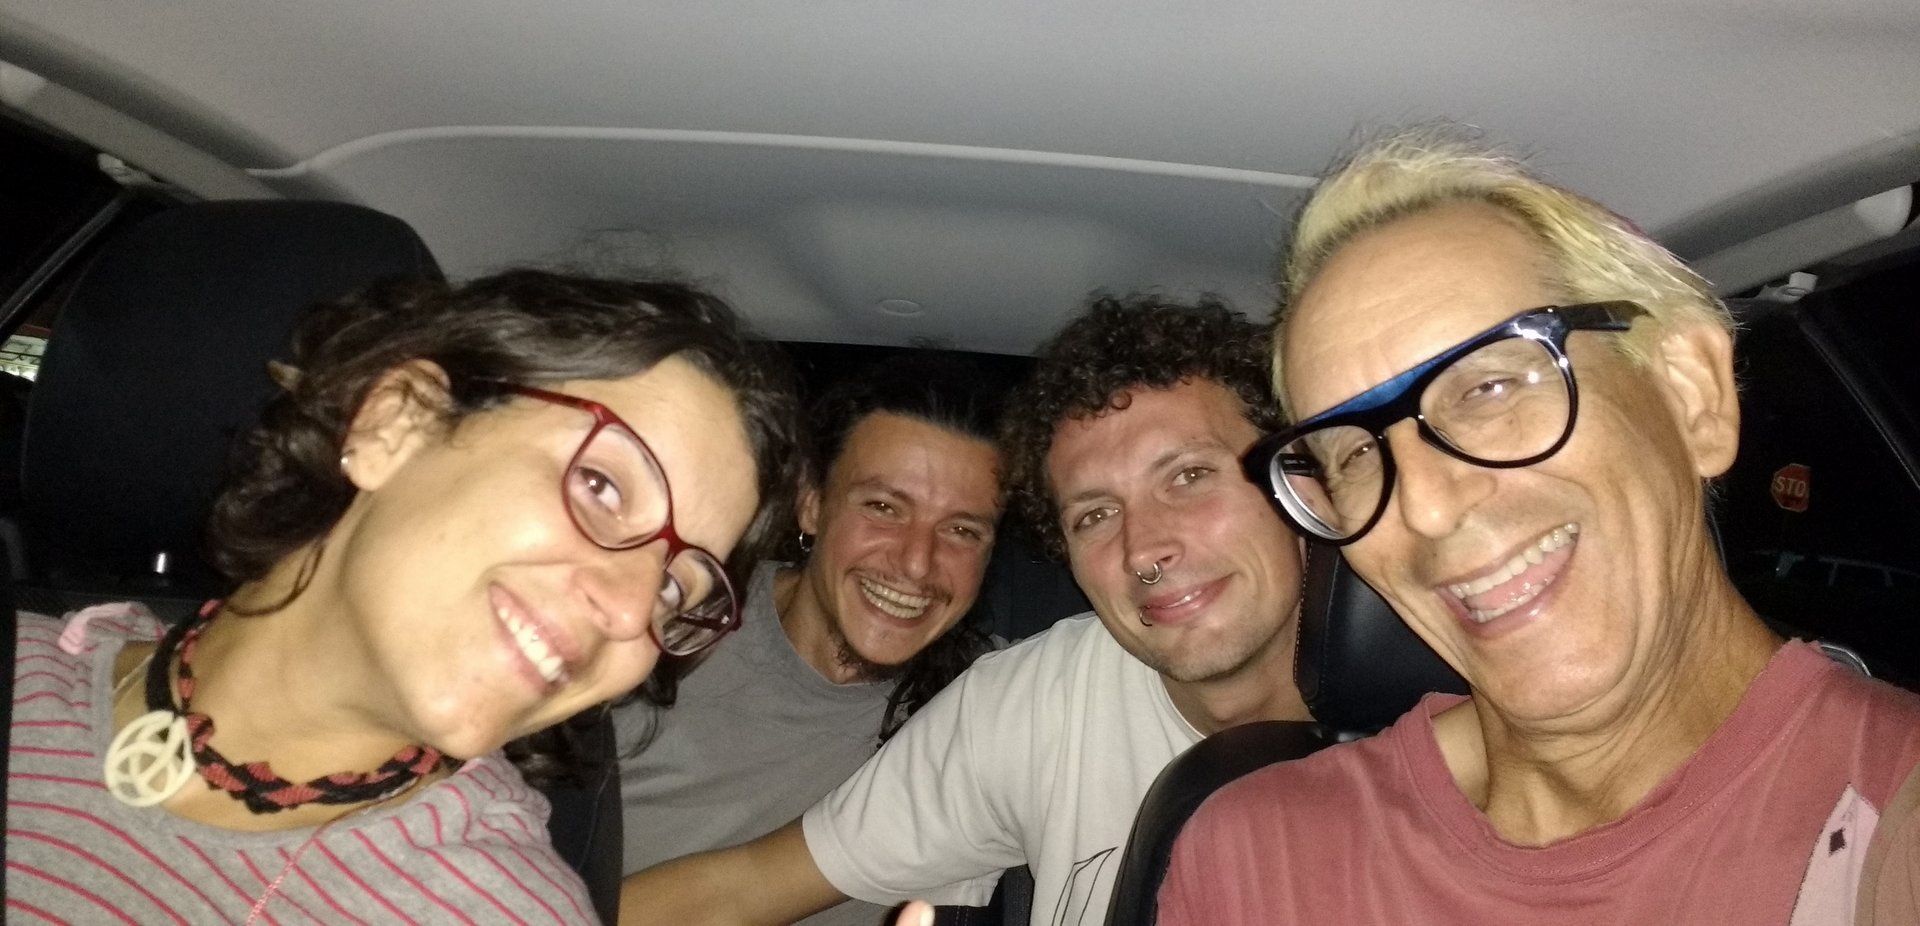 selfie of 4 people inside a car